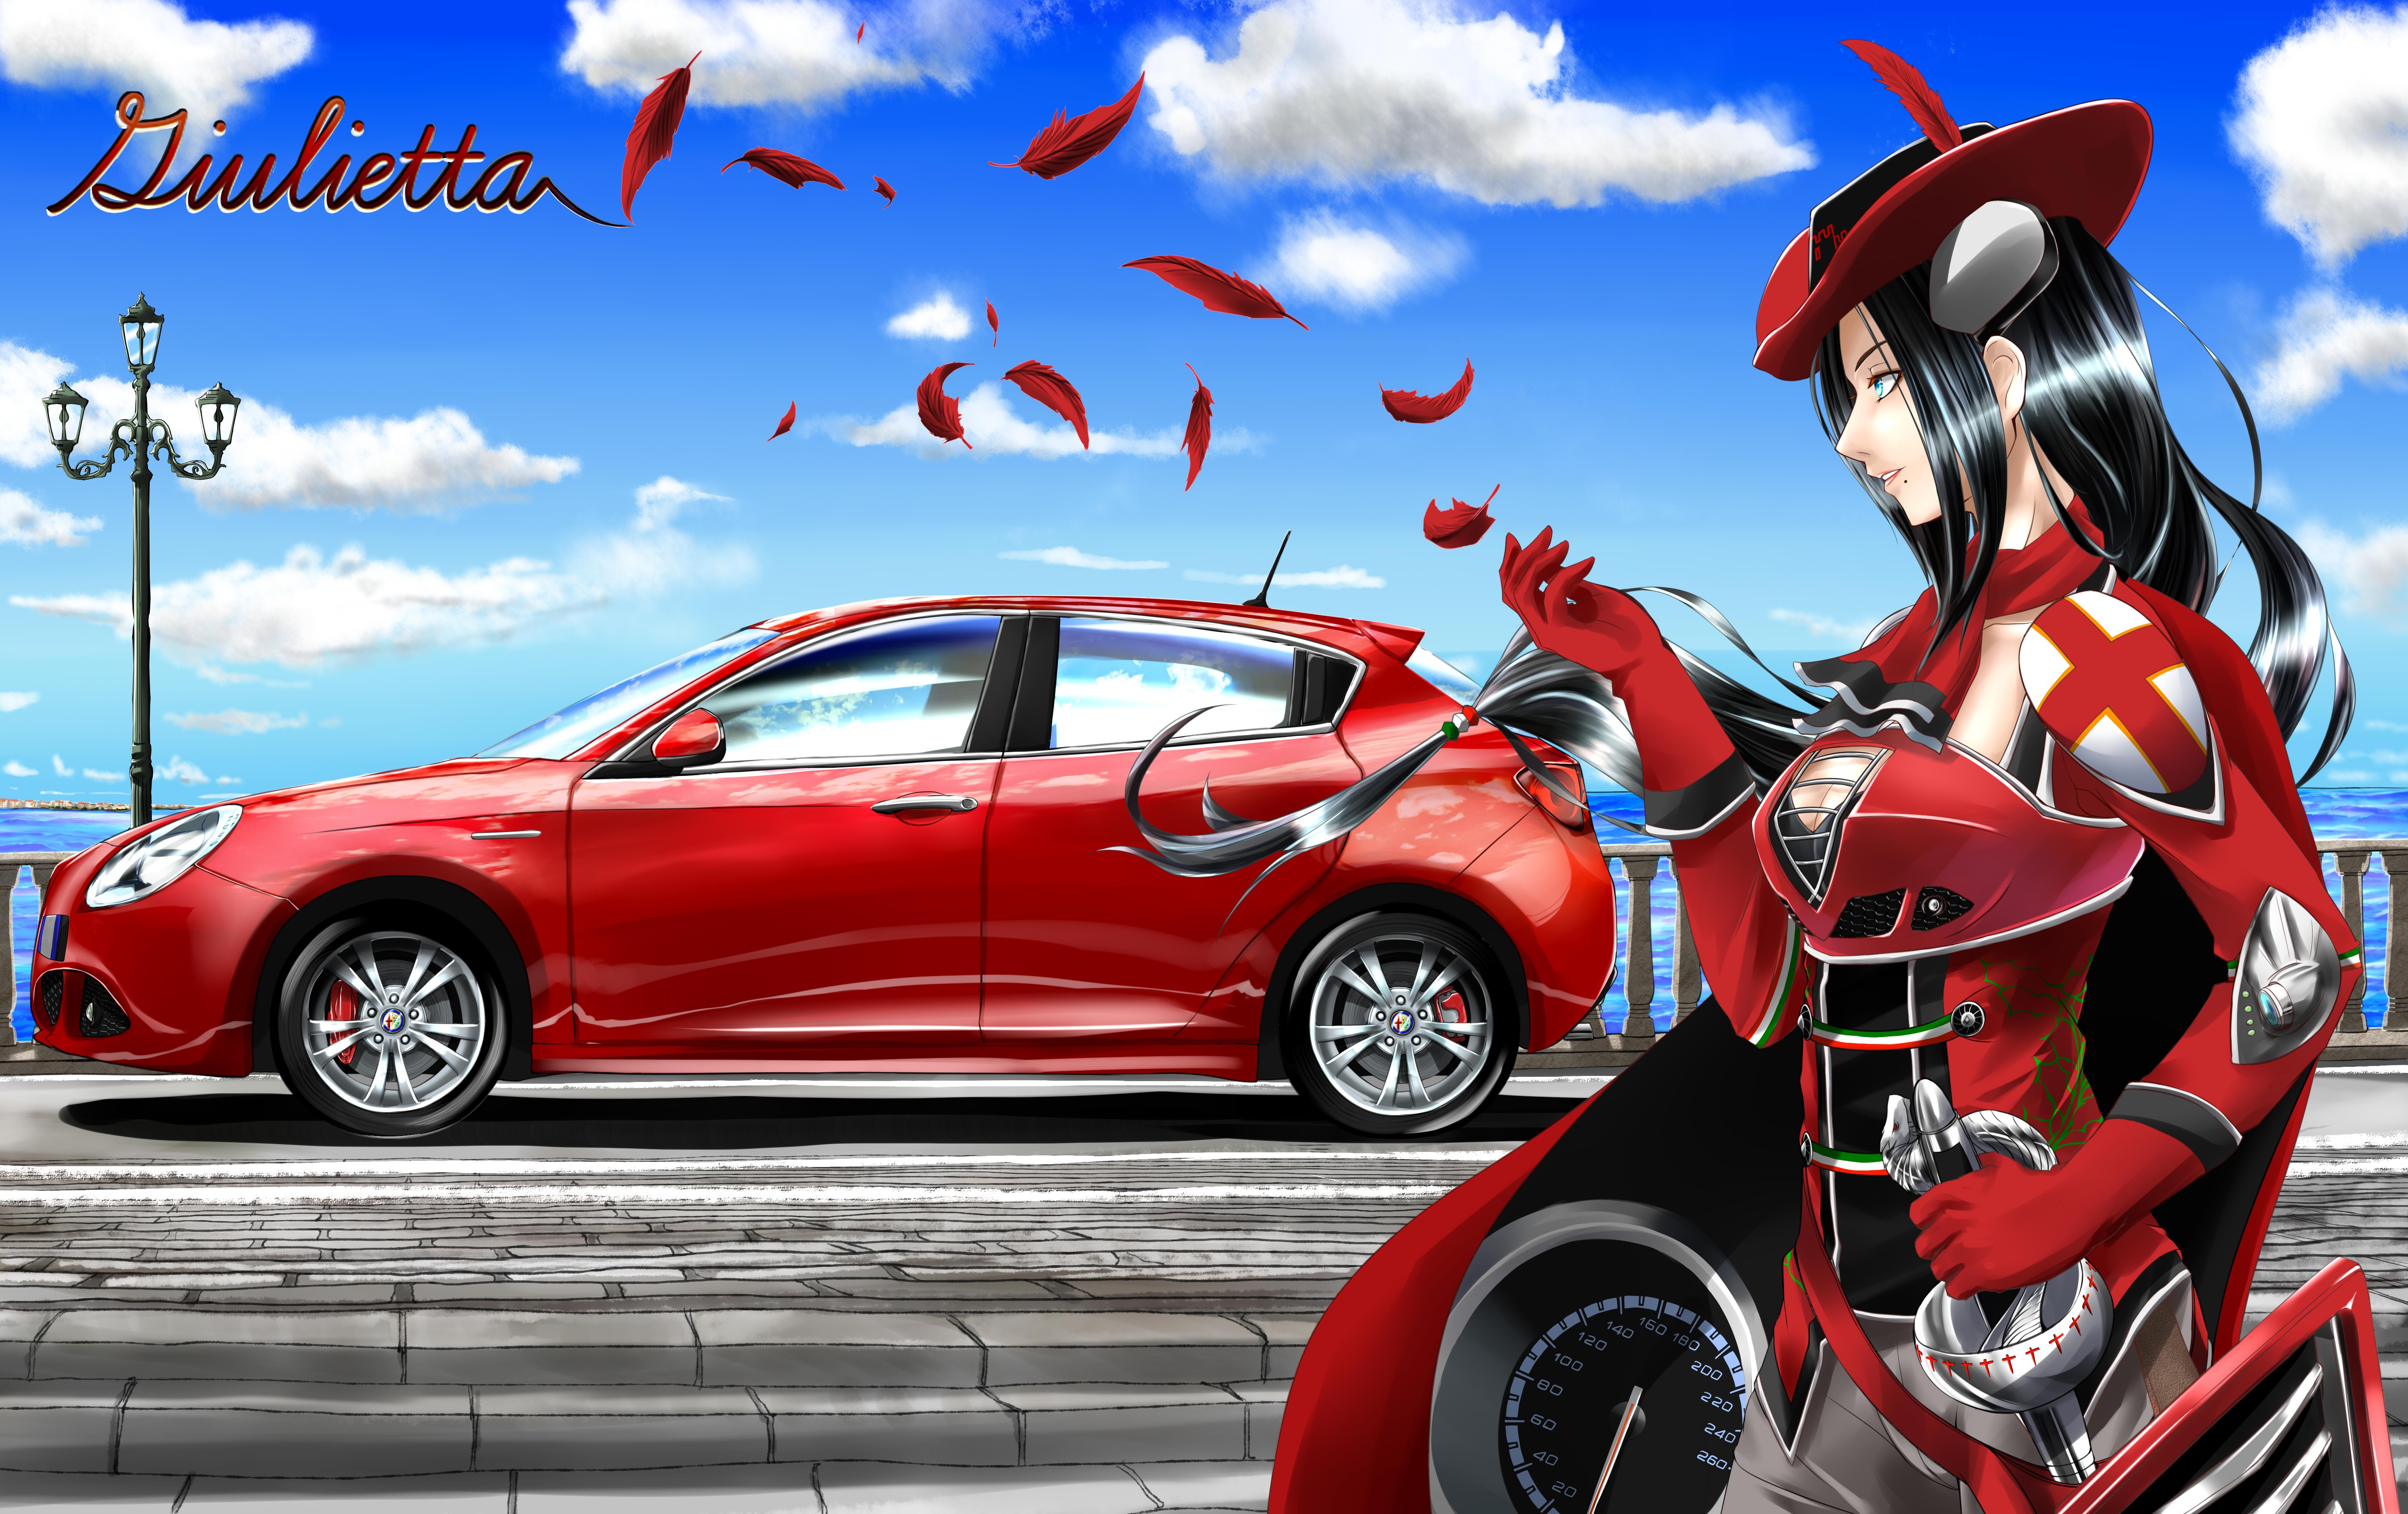 Anime 5580x3508 anime anime girls Alfa Romeo sword long hair car sea sky clouds Pixiv red cars vehicle black hair hat women with hats women with swords